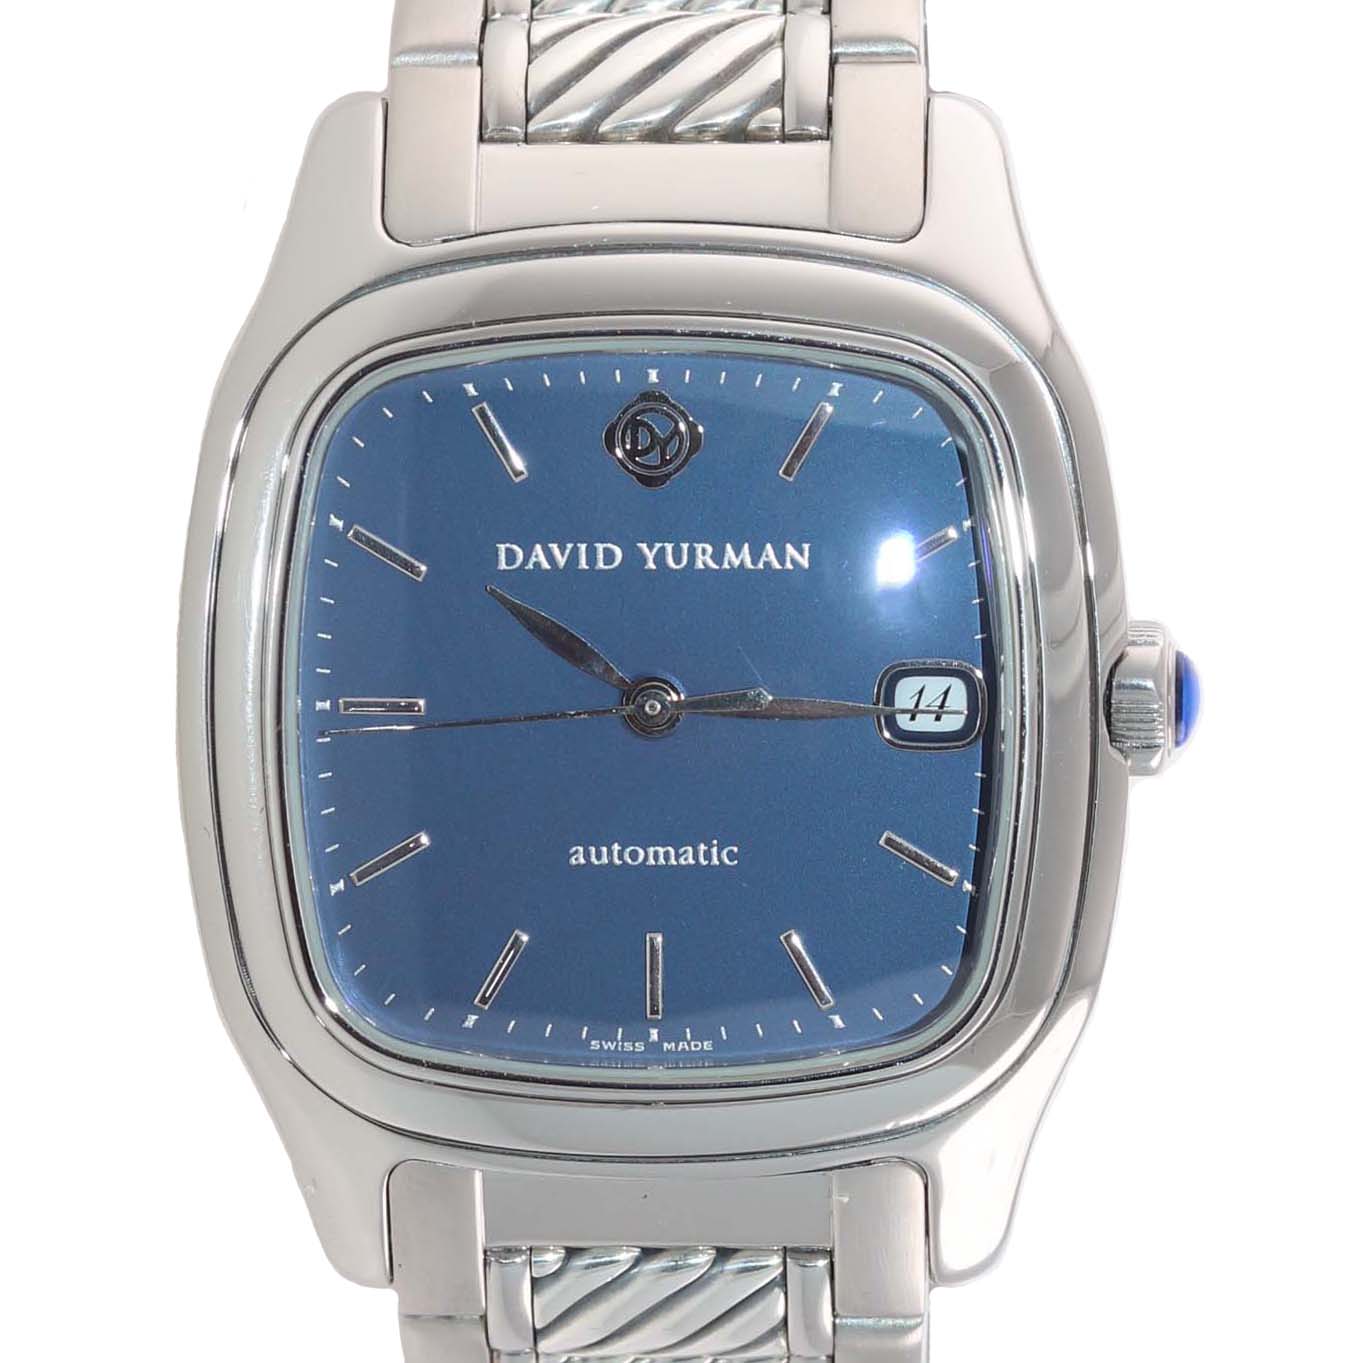 MINT David Yurman Steel Thoroughbred Blue Automatic Date 35mm Watch T301-LST